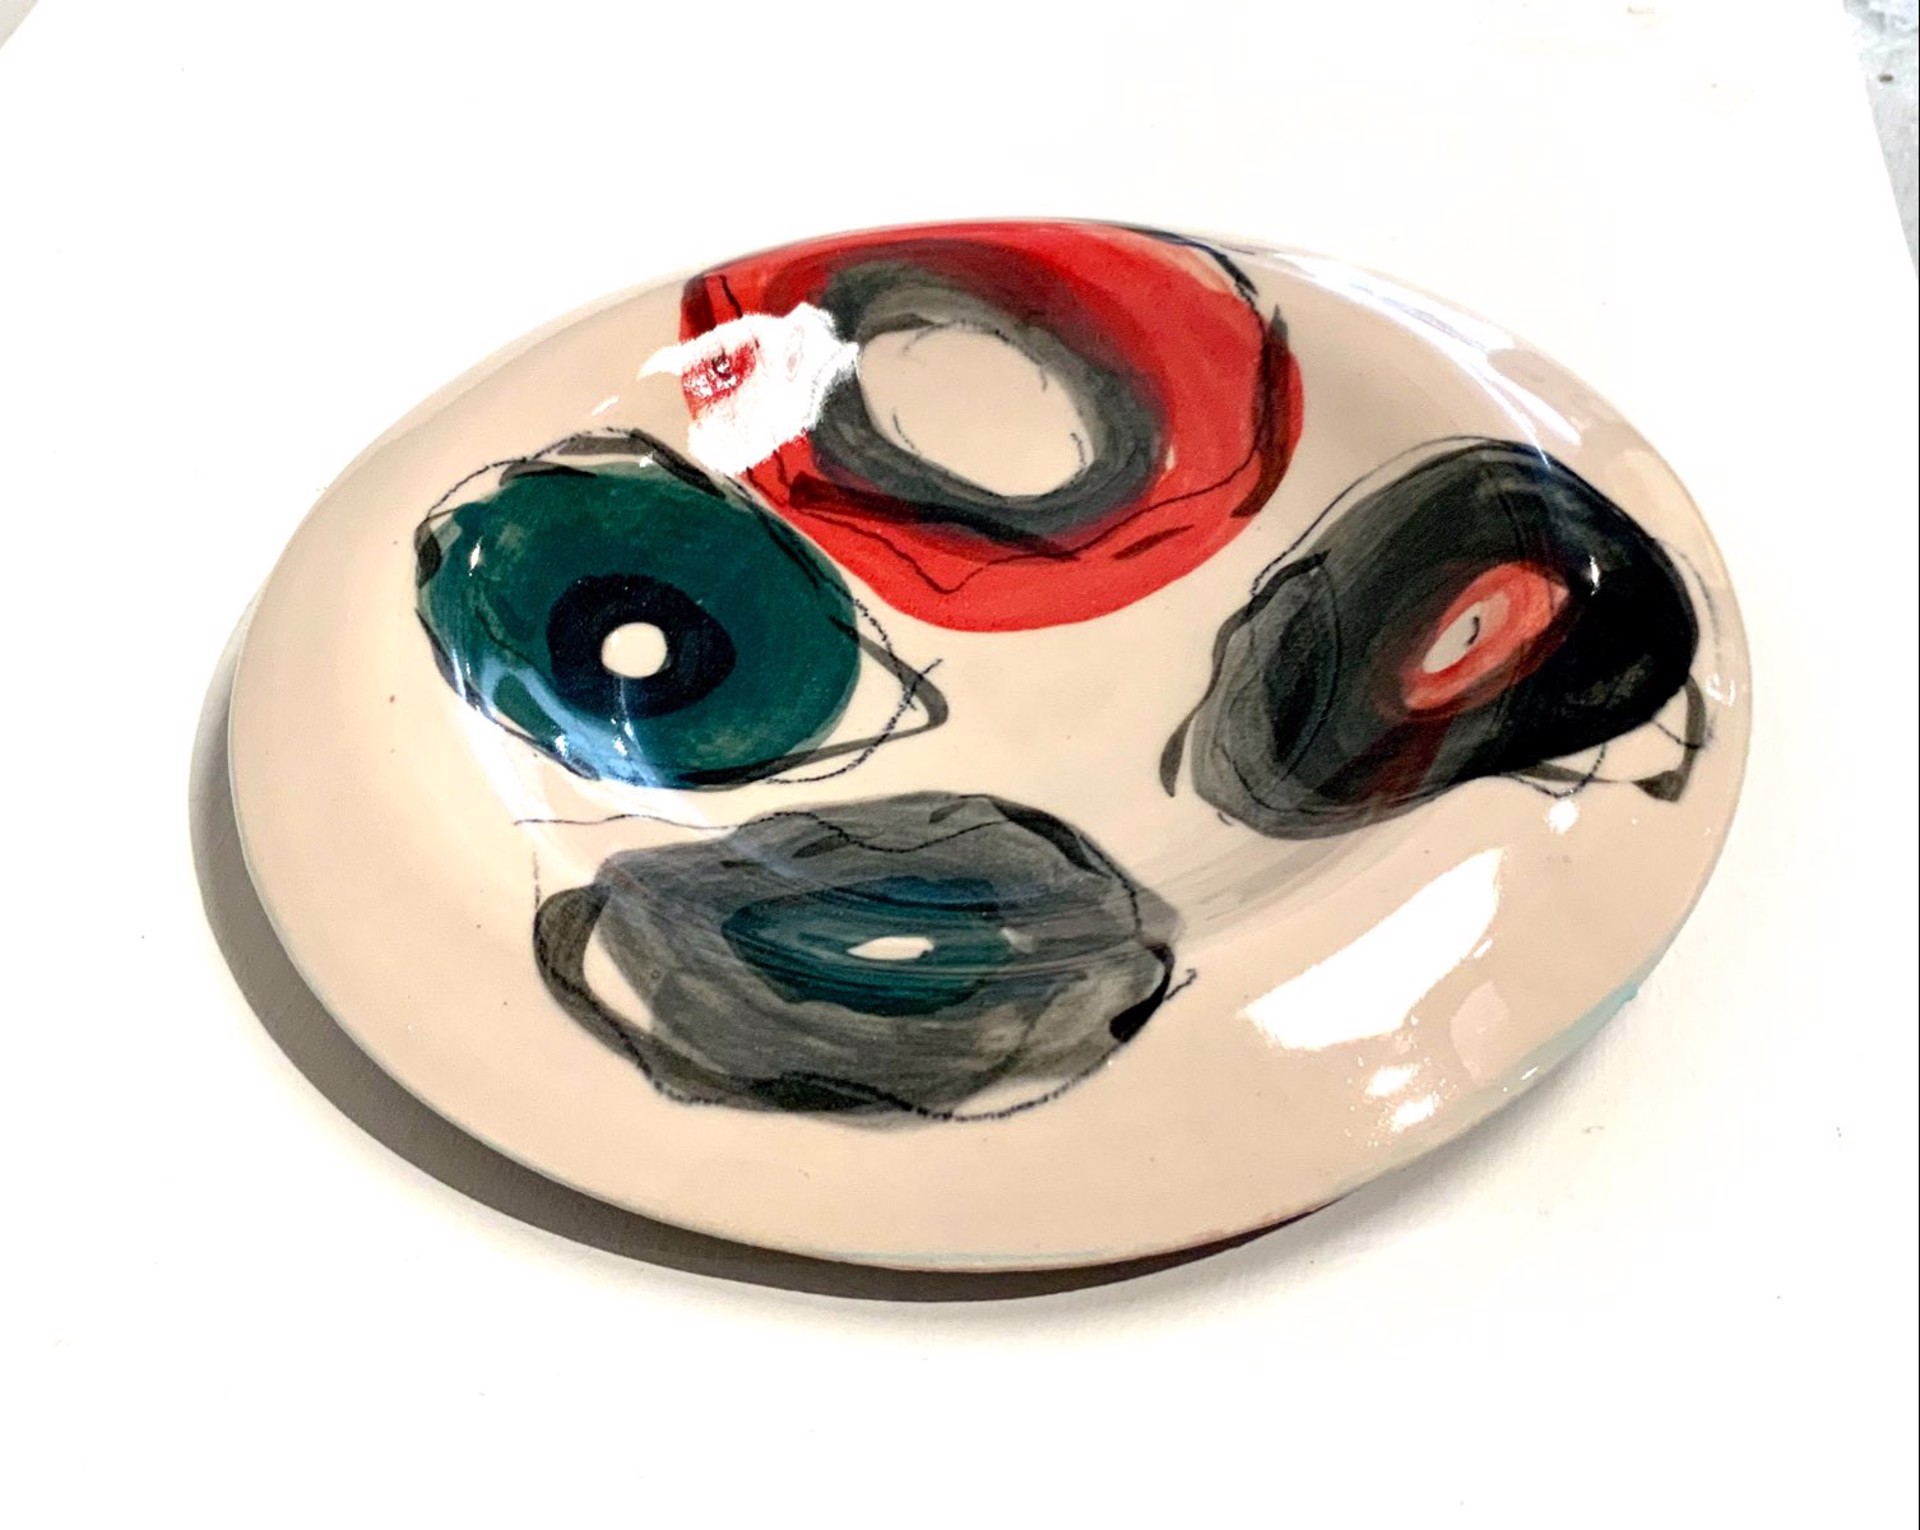 Stoneware With Slips And Glazes by Robert Milnes